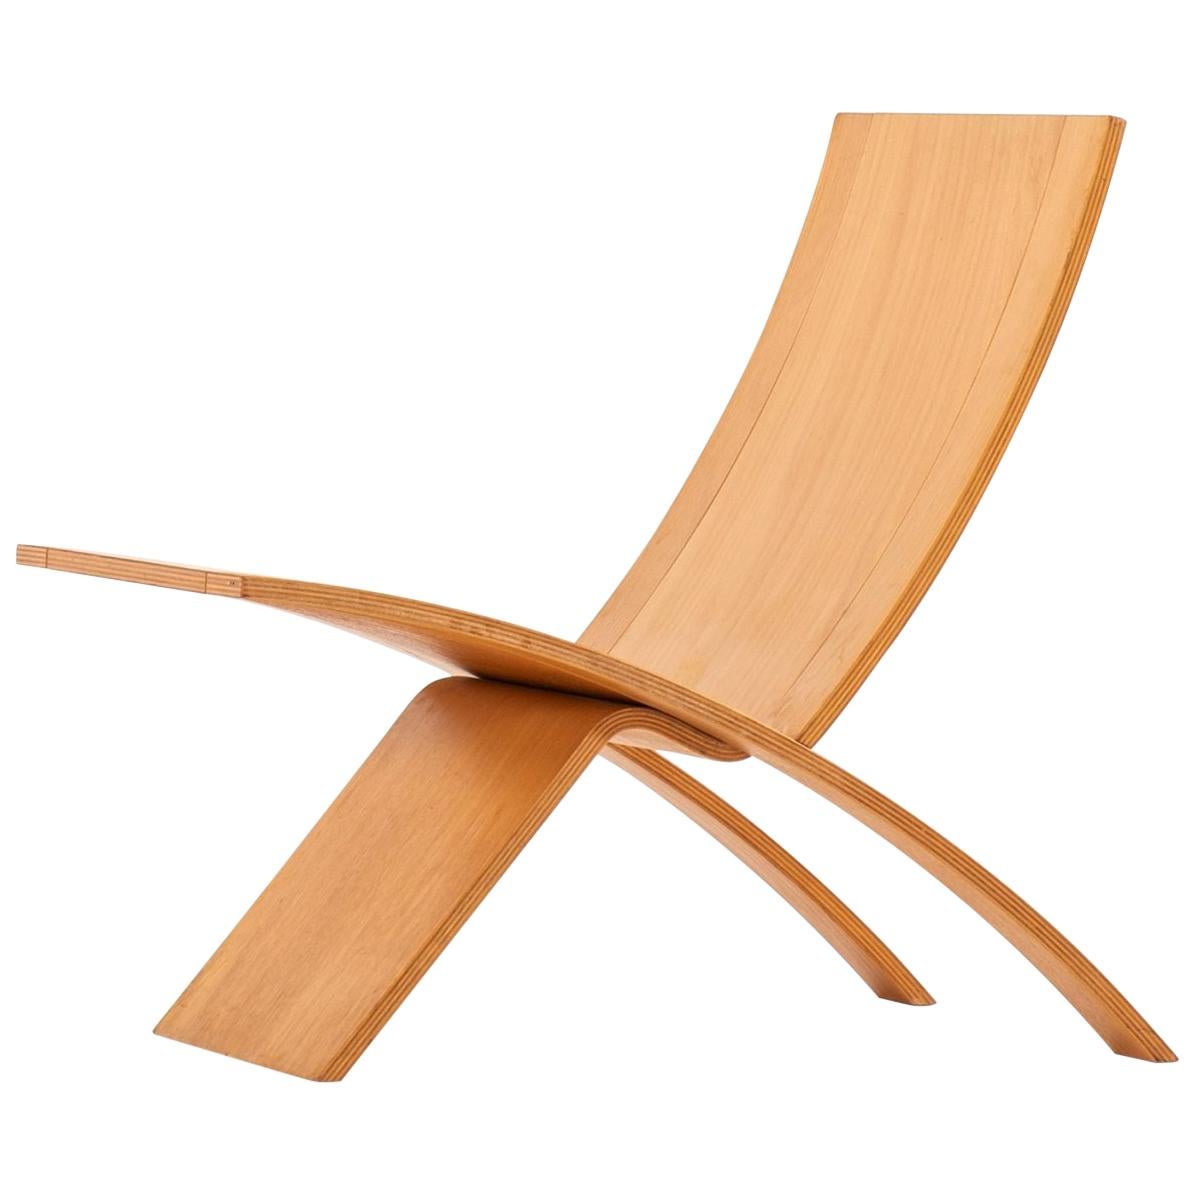 Jens Nielson Easy Chair Model Laminex Produced by Westnofa in Norway